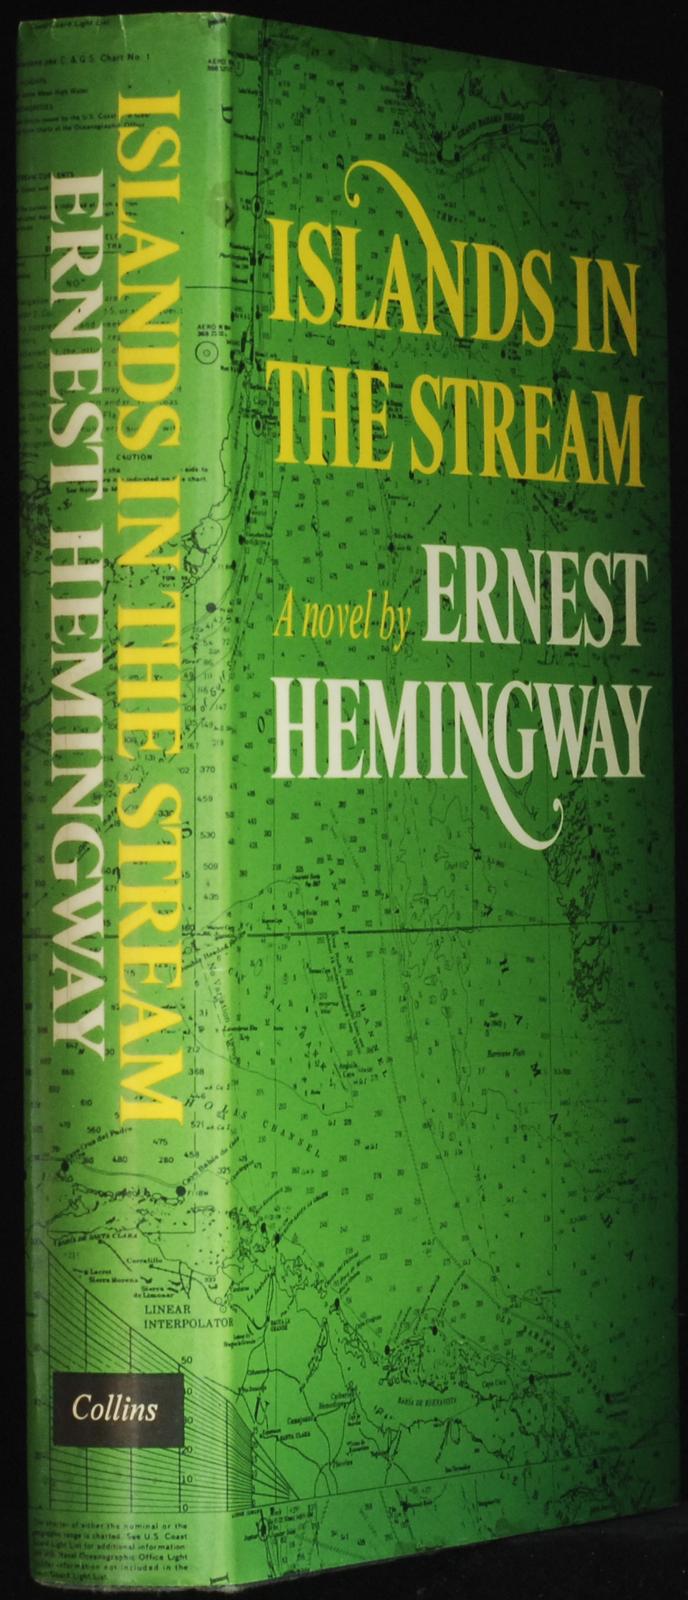 mbb006786c_-_Hemingway_Ernest_-_Islands_In_The_Stream.jpg